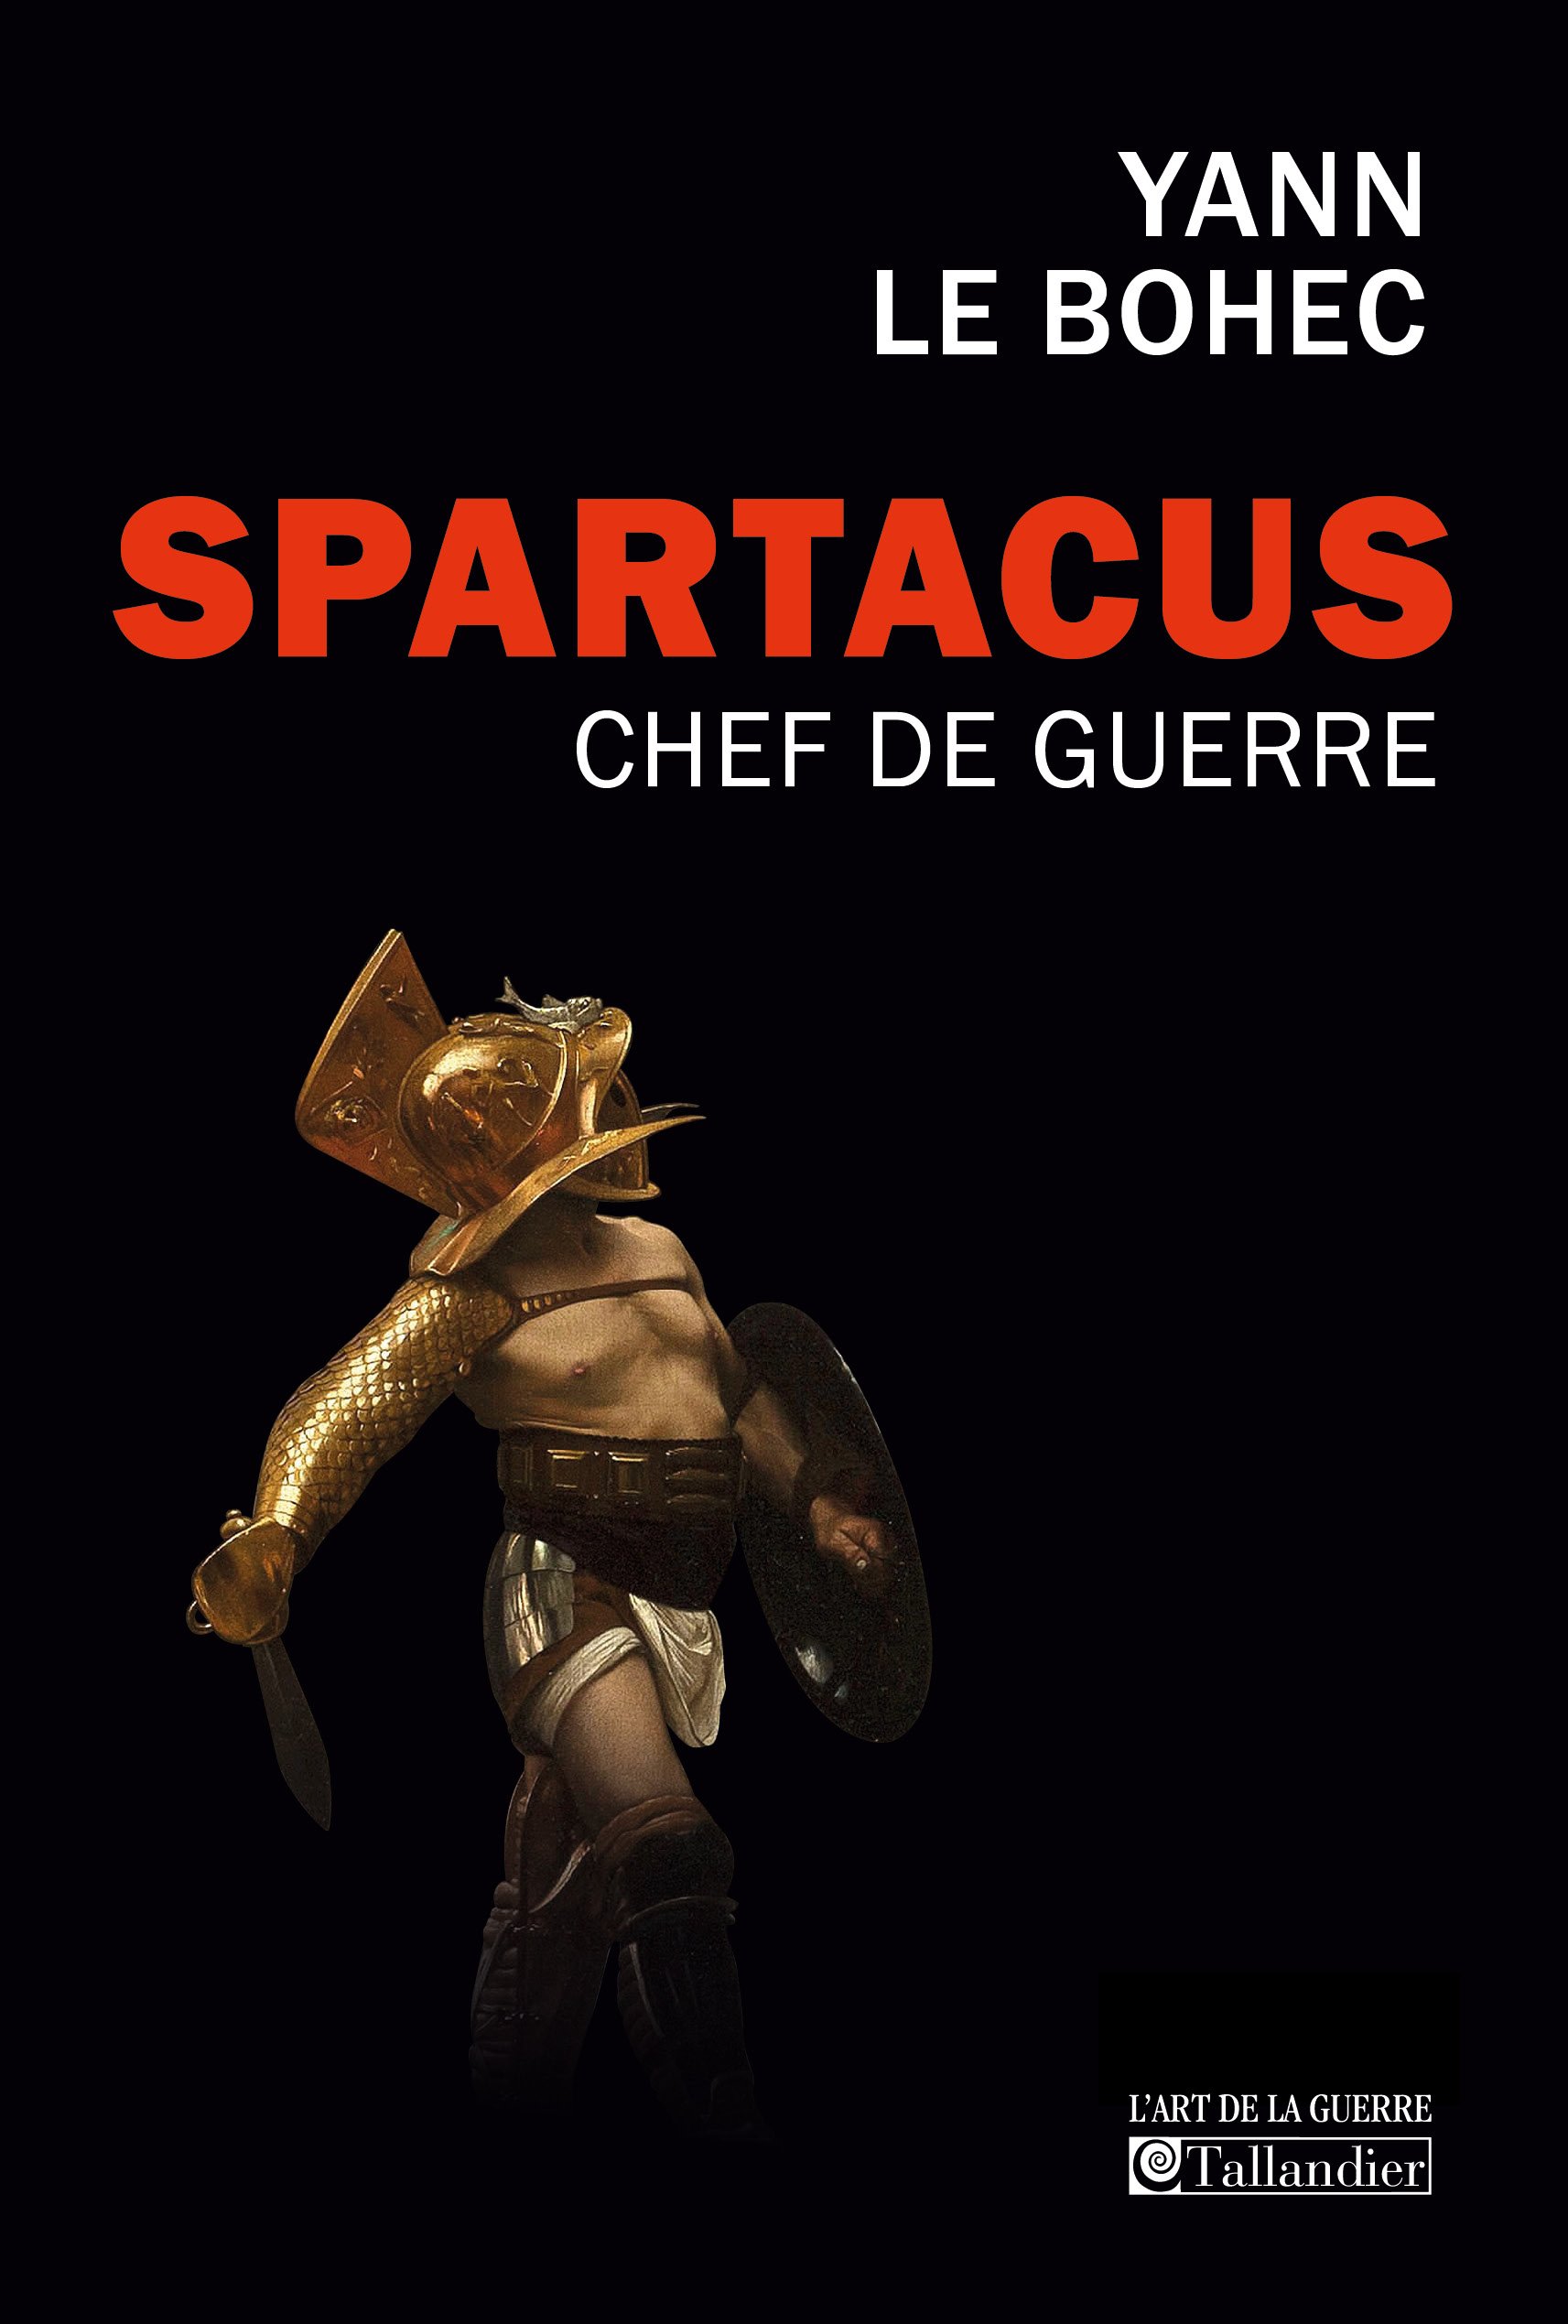 Spartacus, chef de guerre, 2016, 224 p.